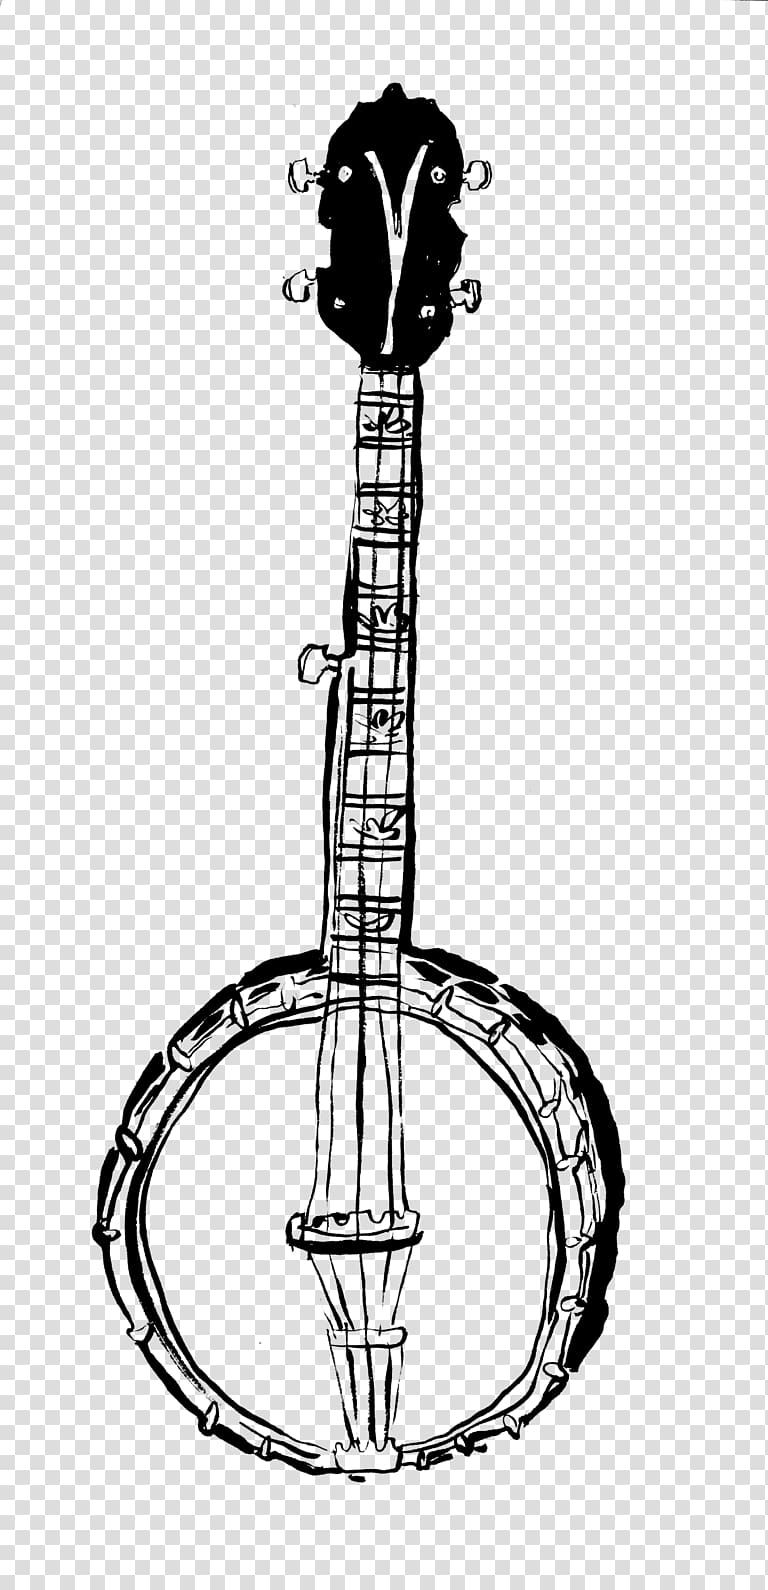 Beer Berliner Weisse Plucked string instrument Saison Musical Instruments, banjo transparent background PNG clipart